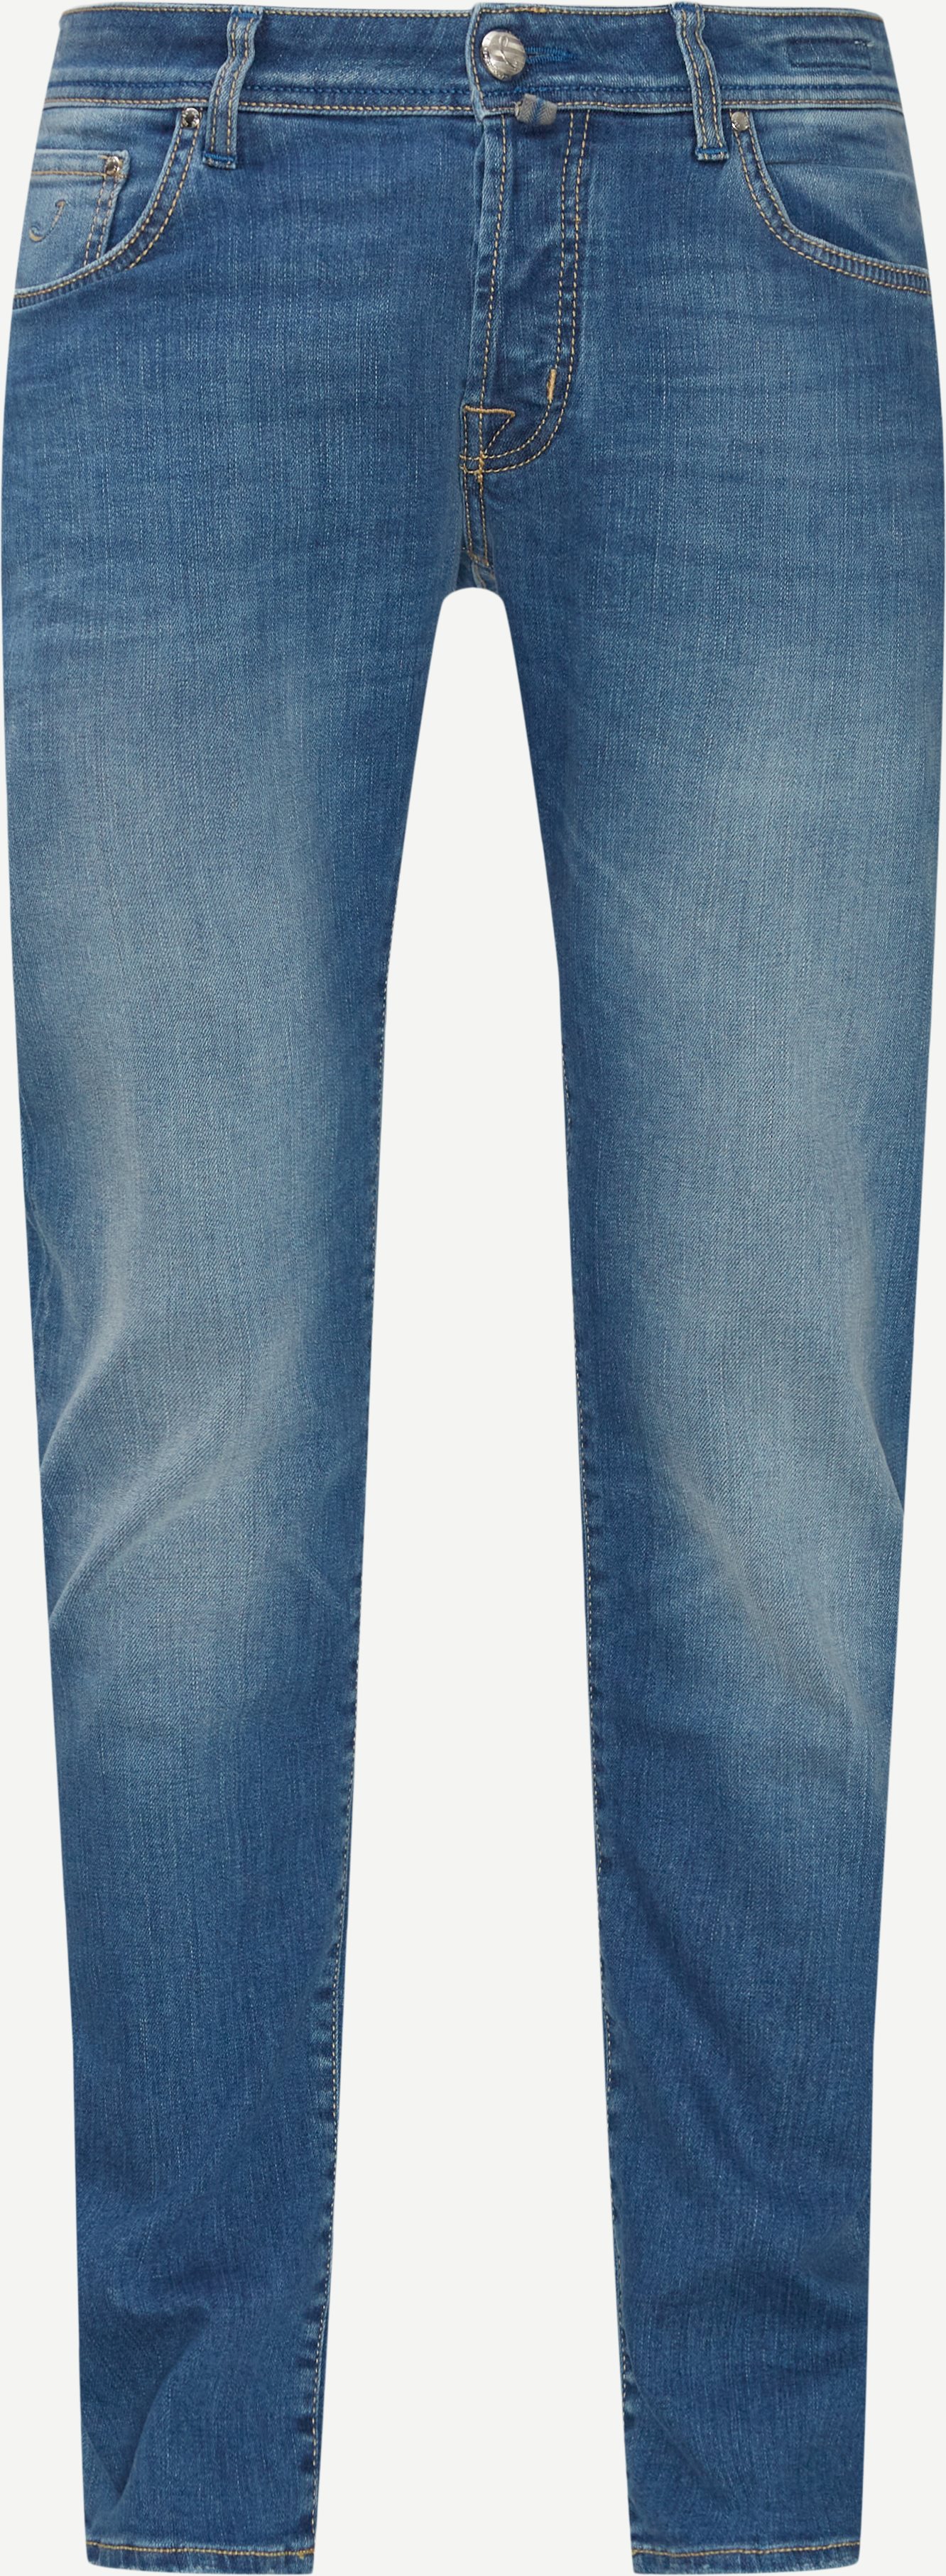 3623 Nick Denim Jenas - Jeans - Slim fit - Denim